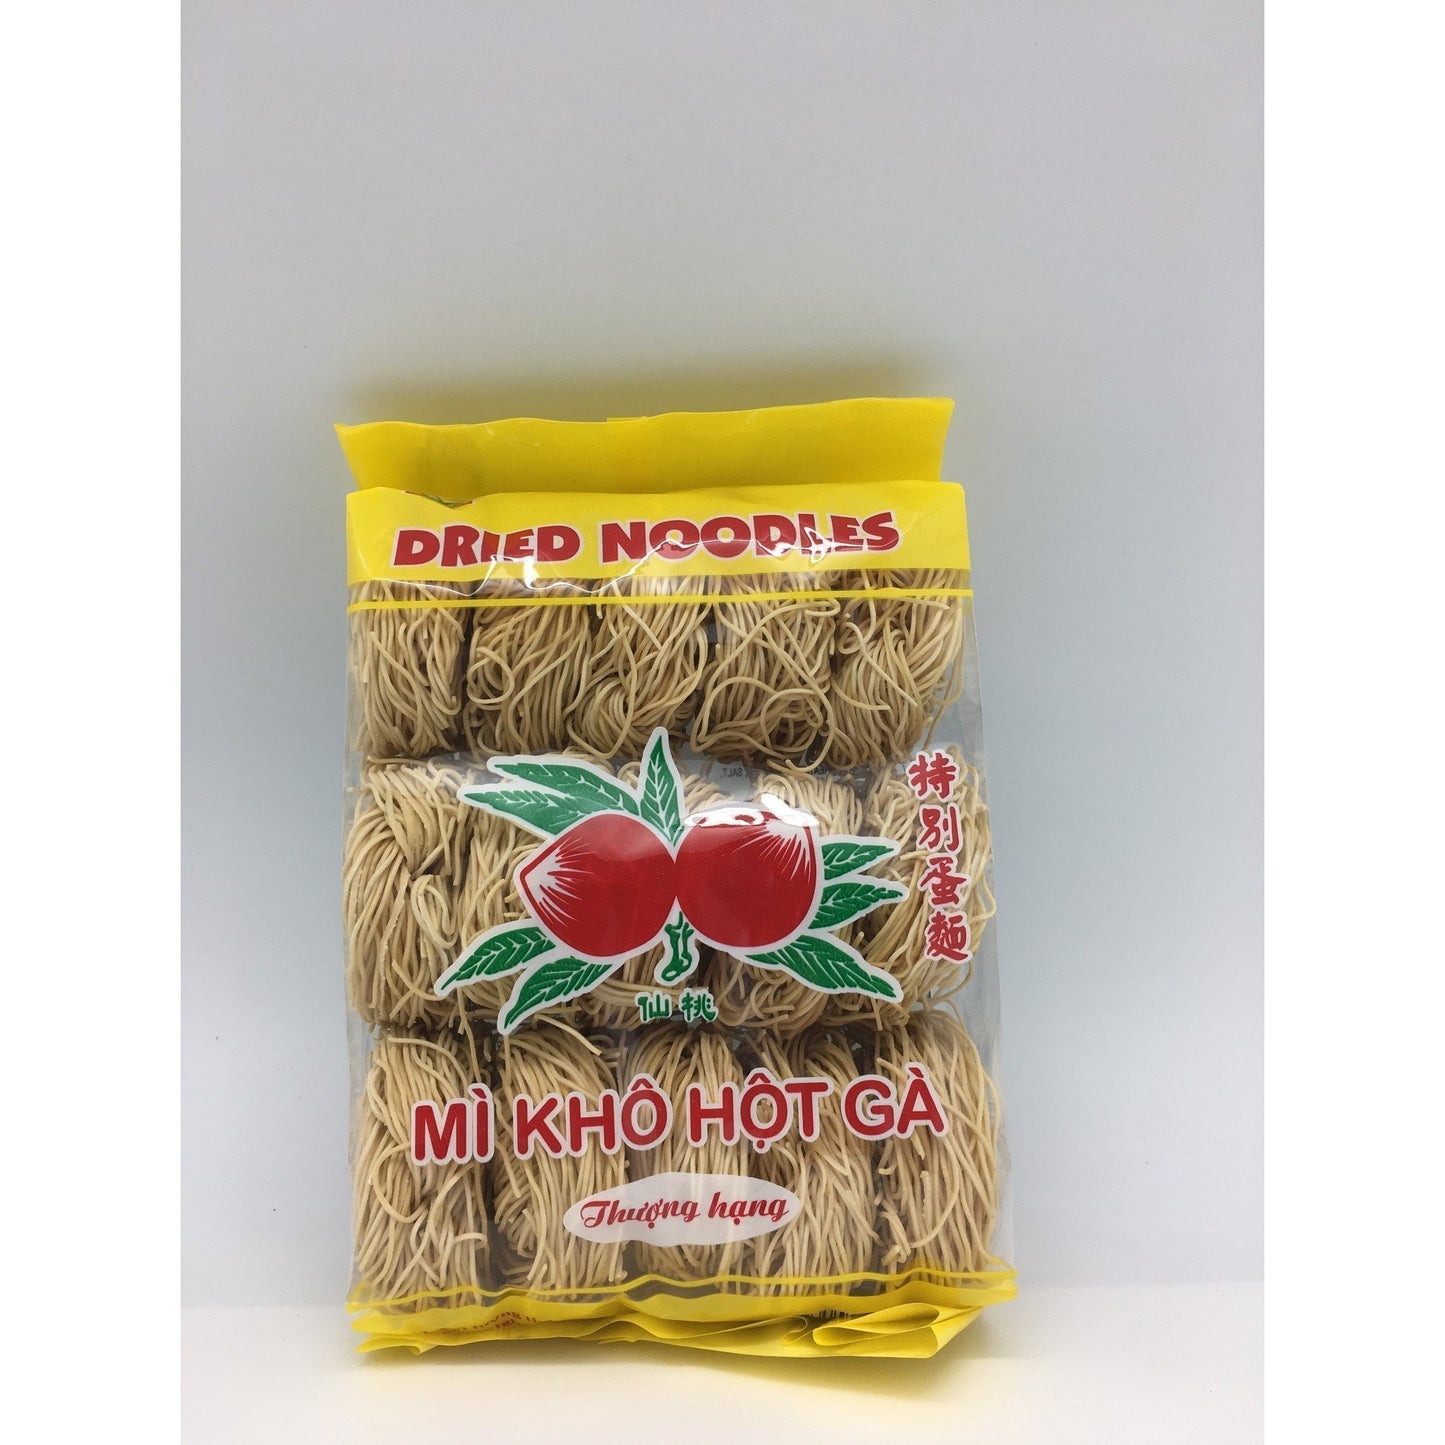 N020S Double Peach Brand - Dried Noodles 400g - 36 bags / 1CTN - New Eastland Pty Ltd - Asian food wholesalers